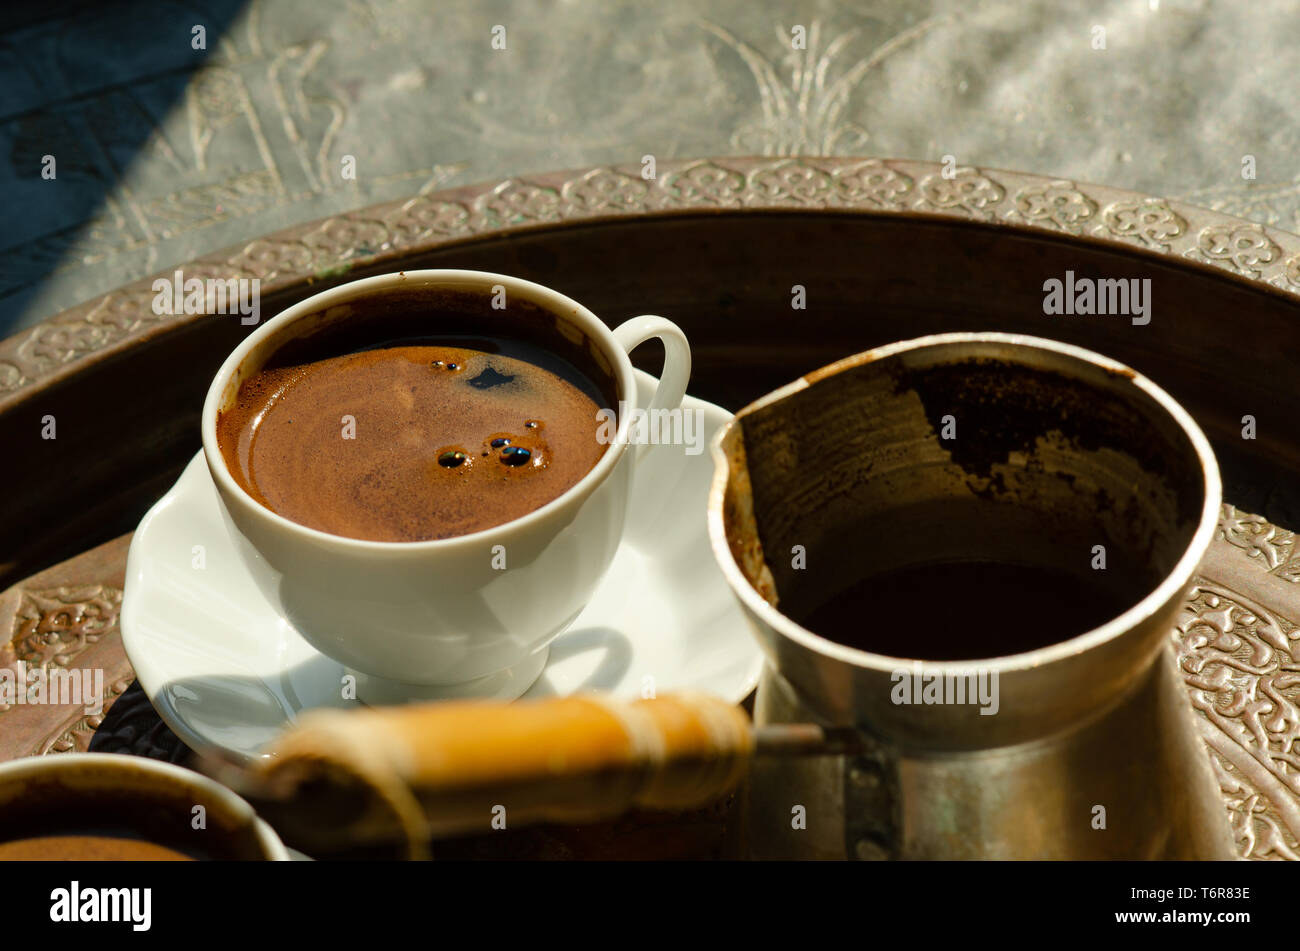 Bandeja tradicionales de café de estilo árabe o turco Foto de stock